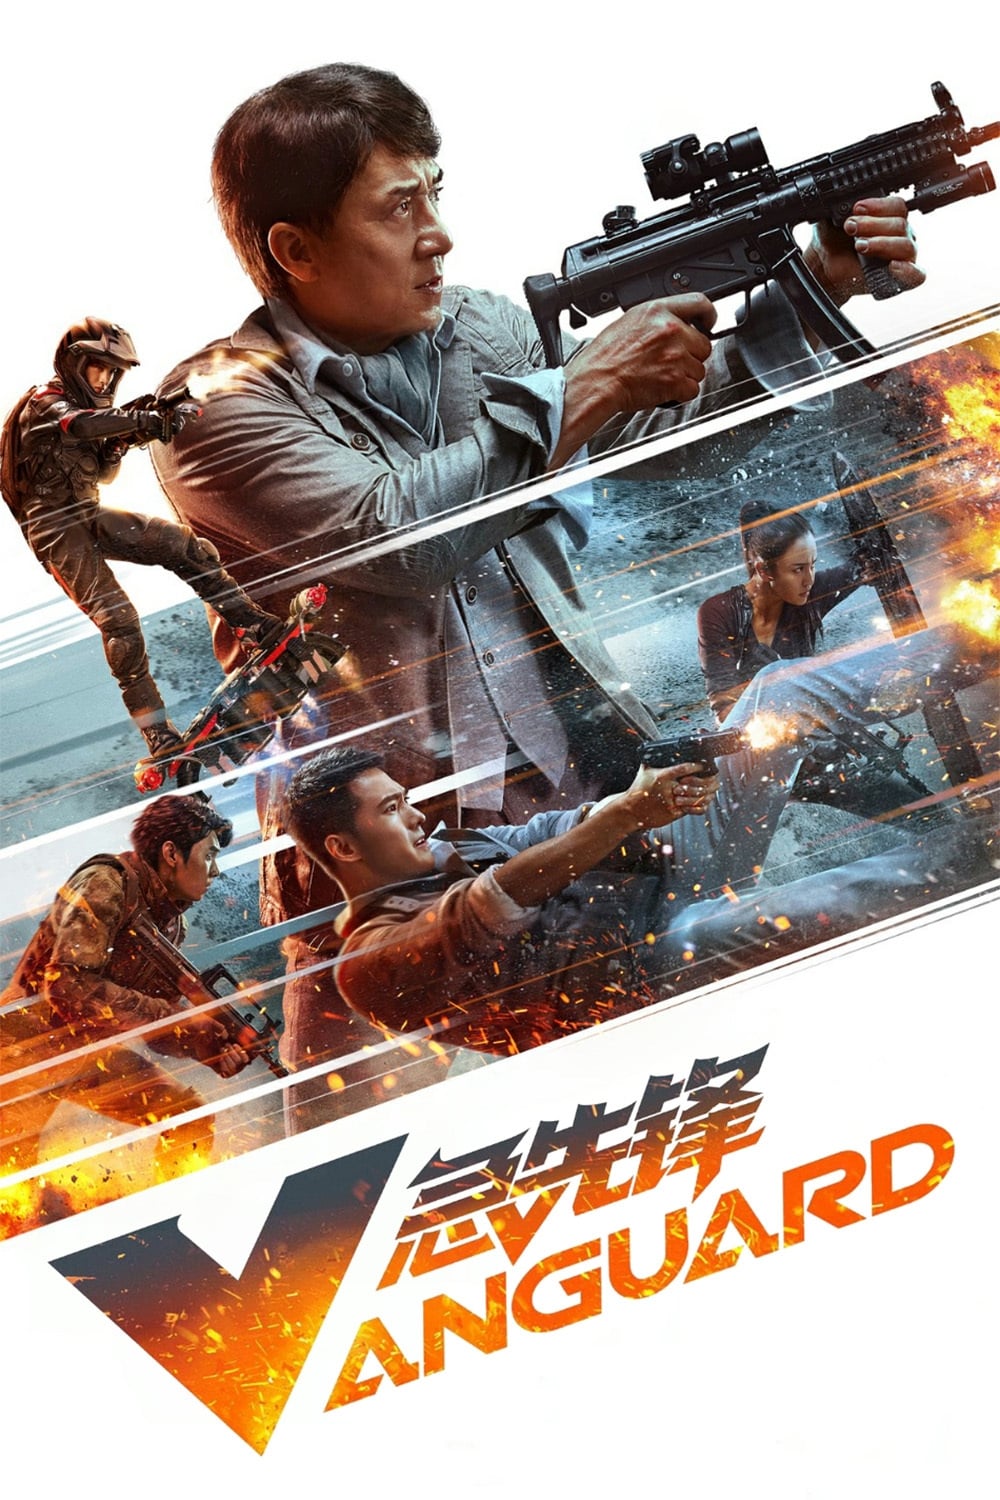 Agentes Vanguard (2020) PLACEBO Full HD 1080p Latino